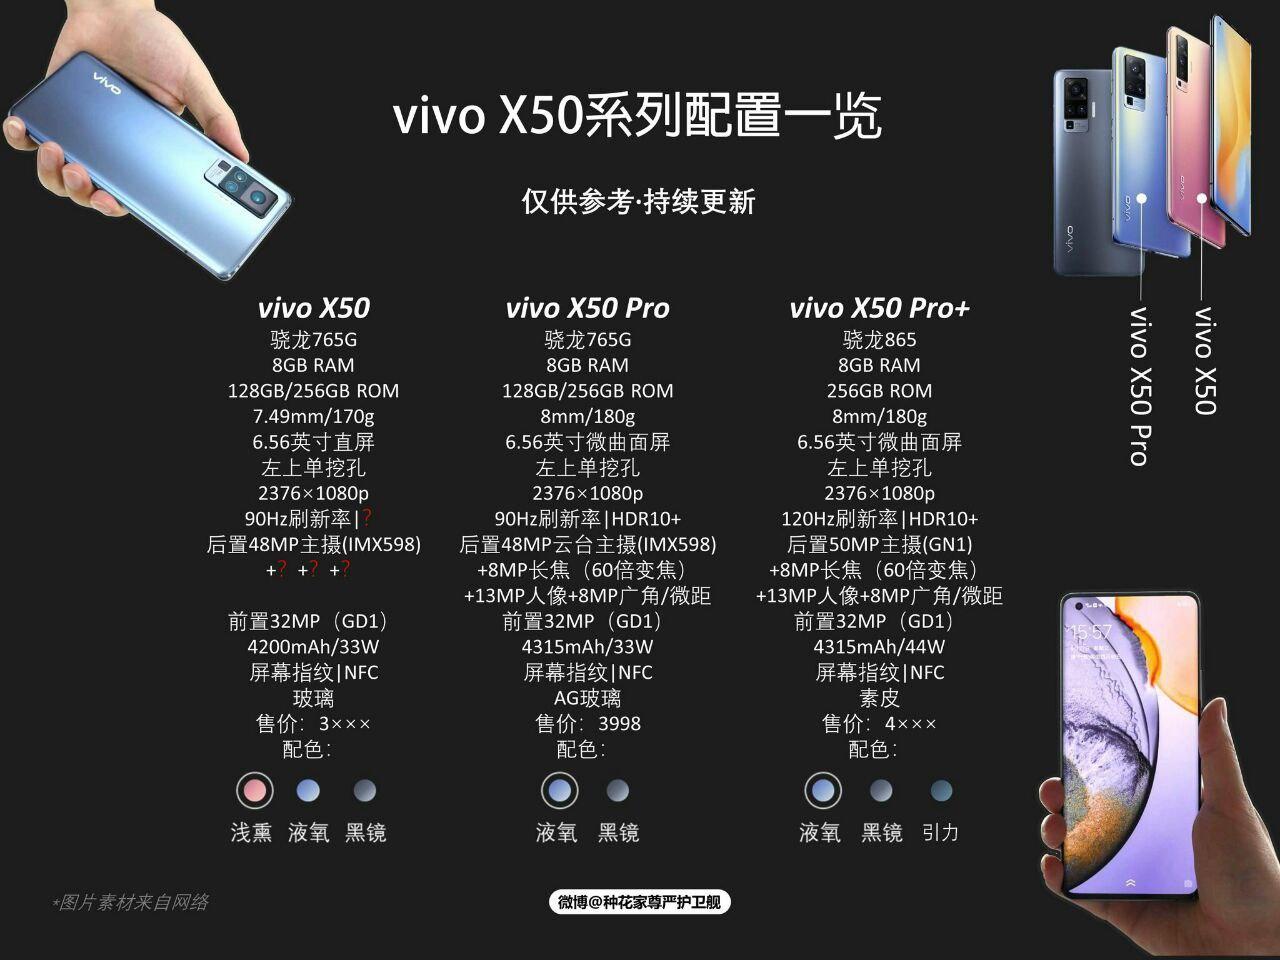 Vivo X50 series